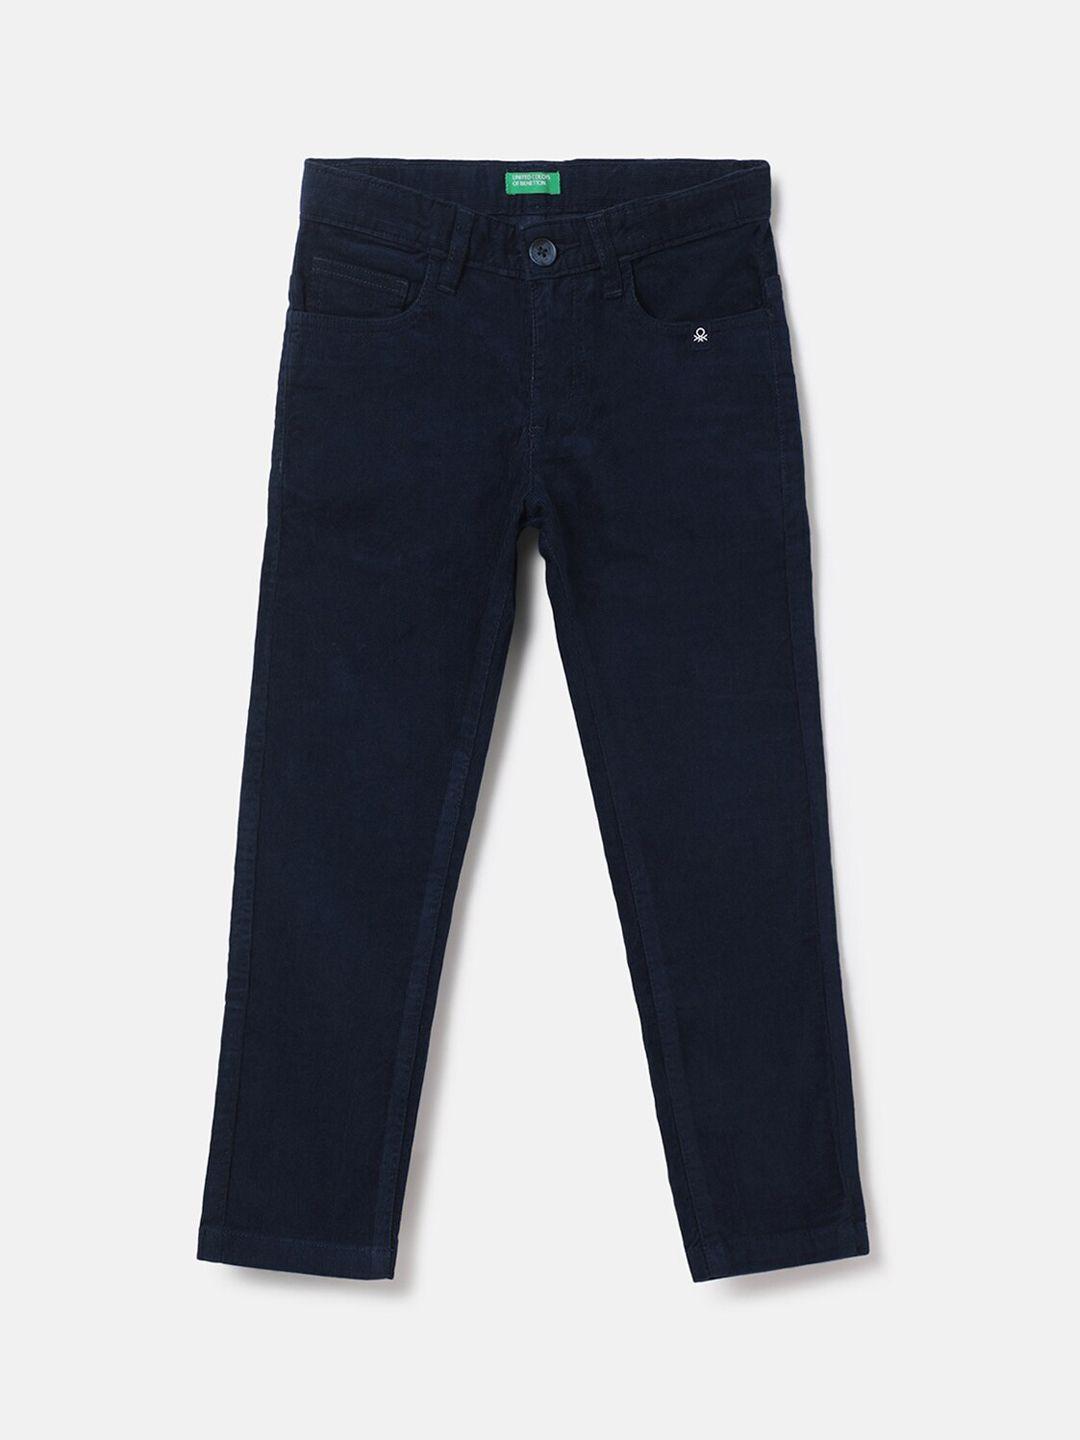 united-colors-of-benetton-boys-navy-blue-cotton-slim-fit-jeans